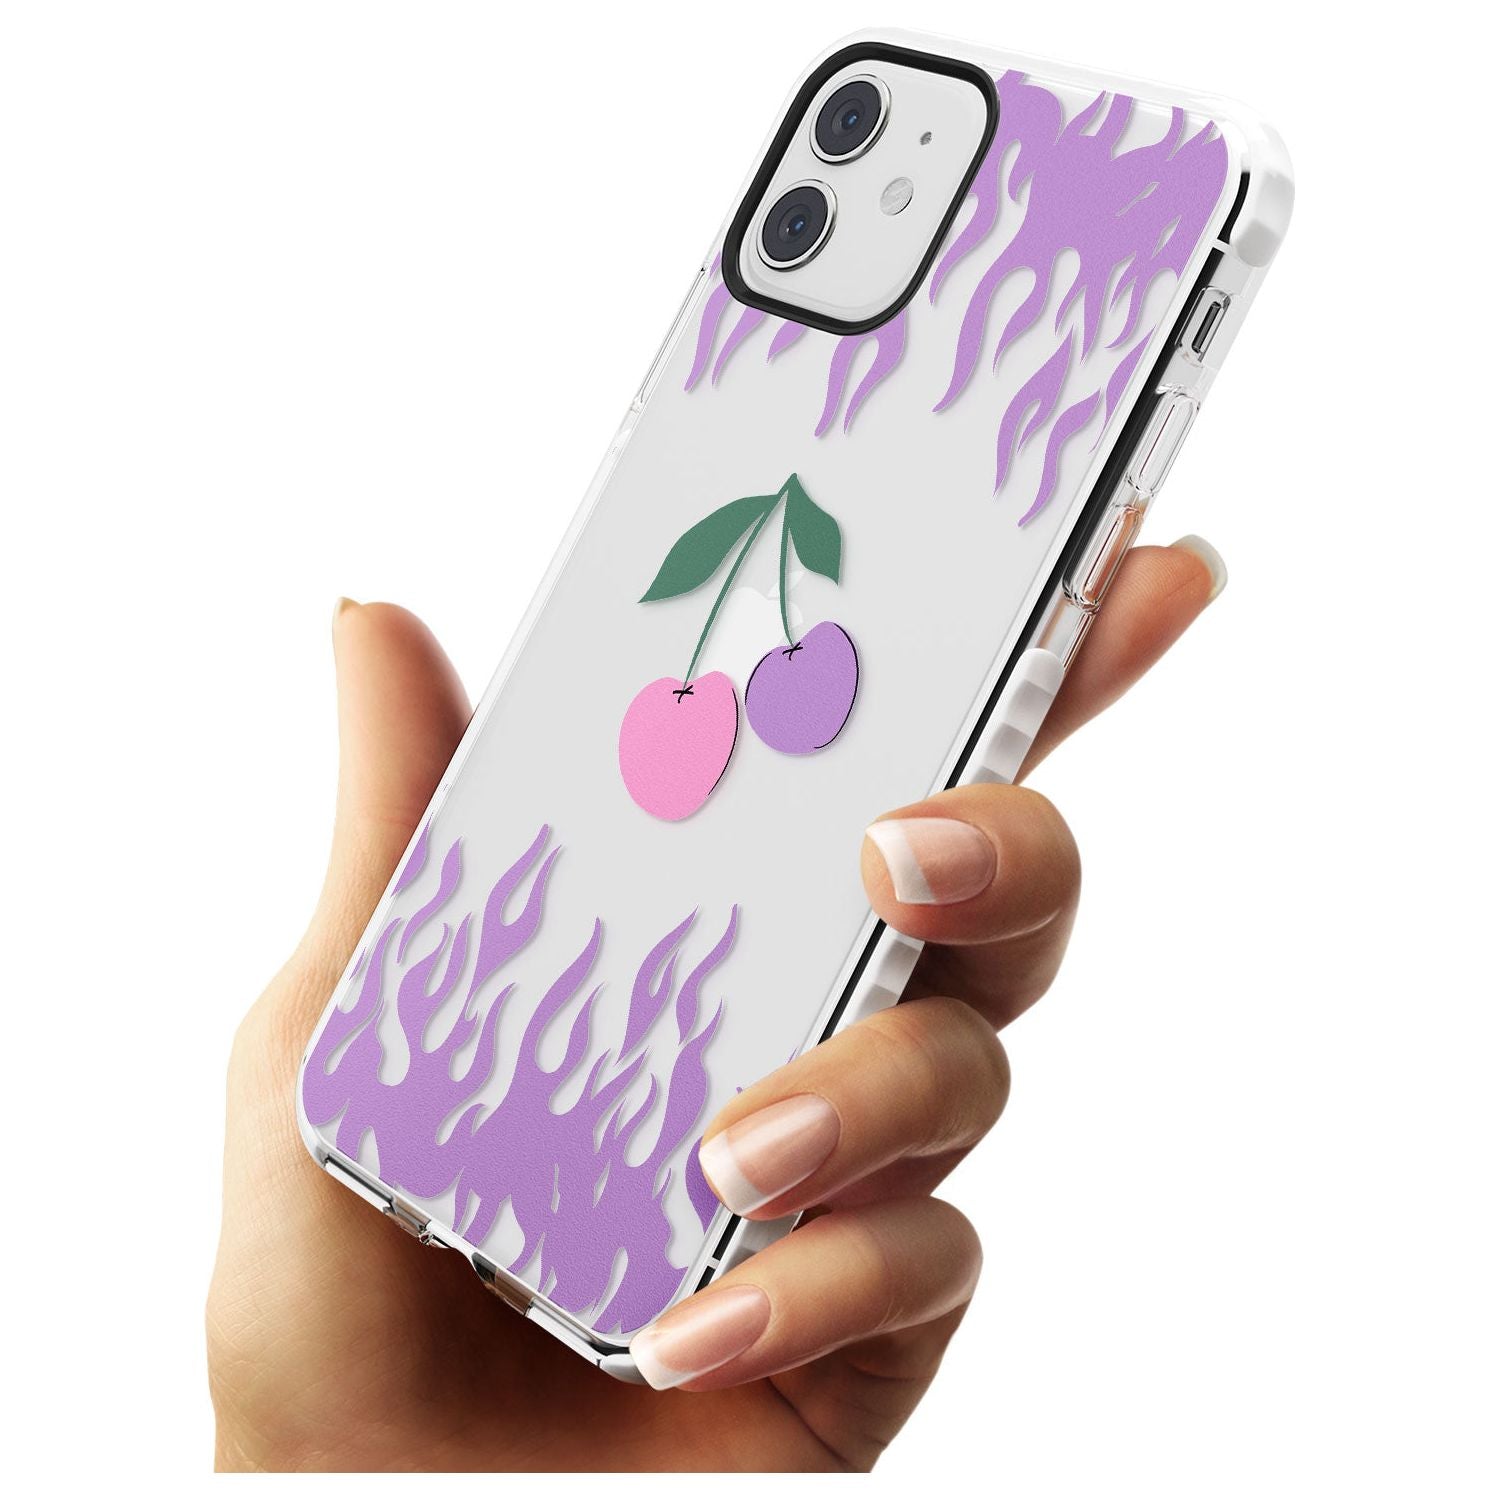 Cherries n' Flames Impact Phone Case for iPhone 11